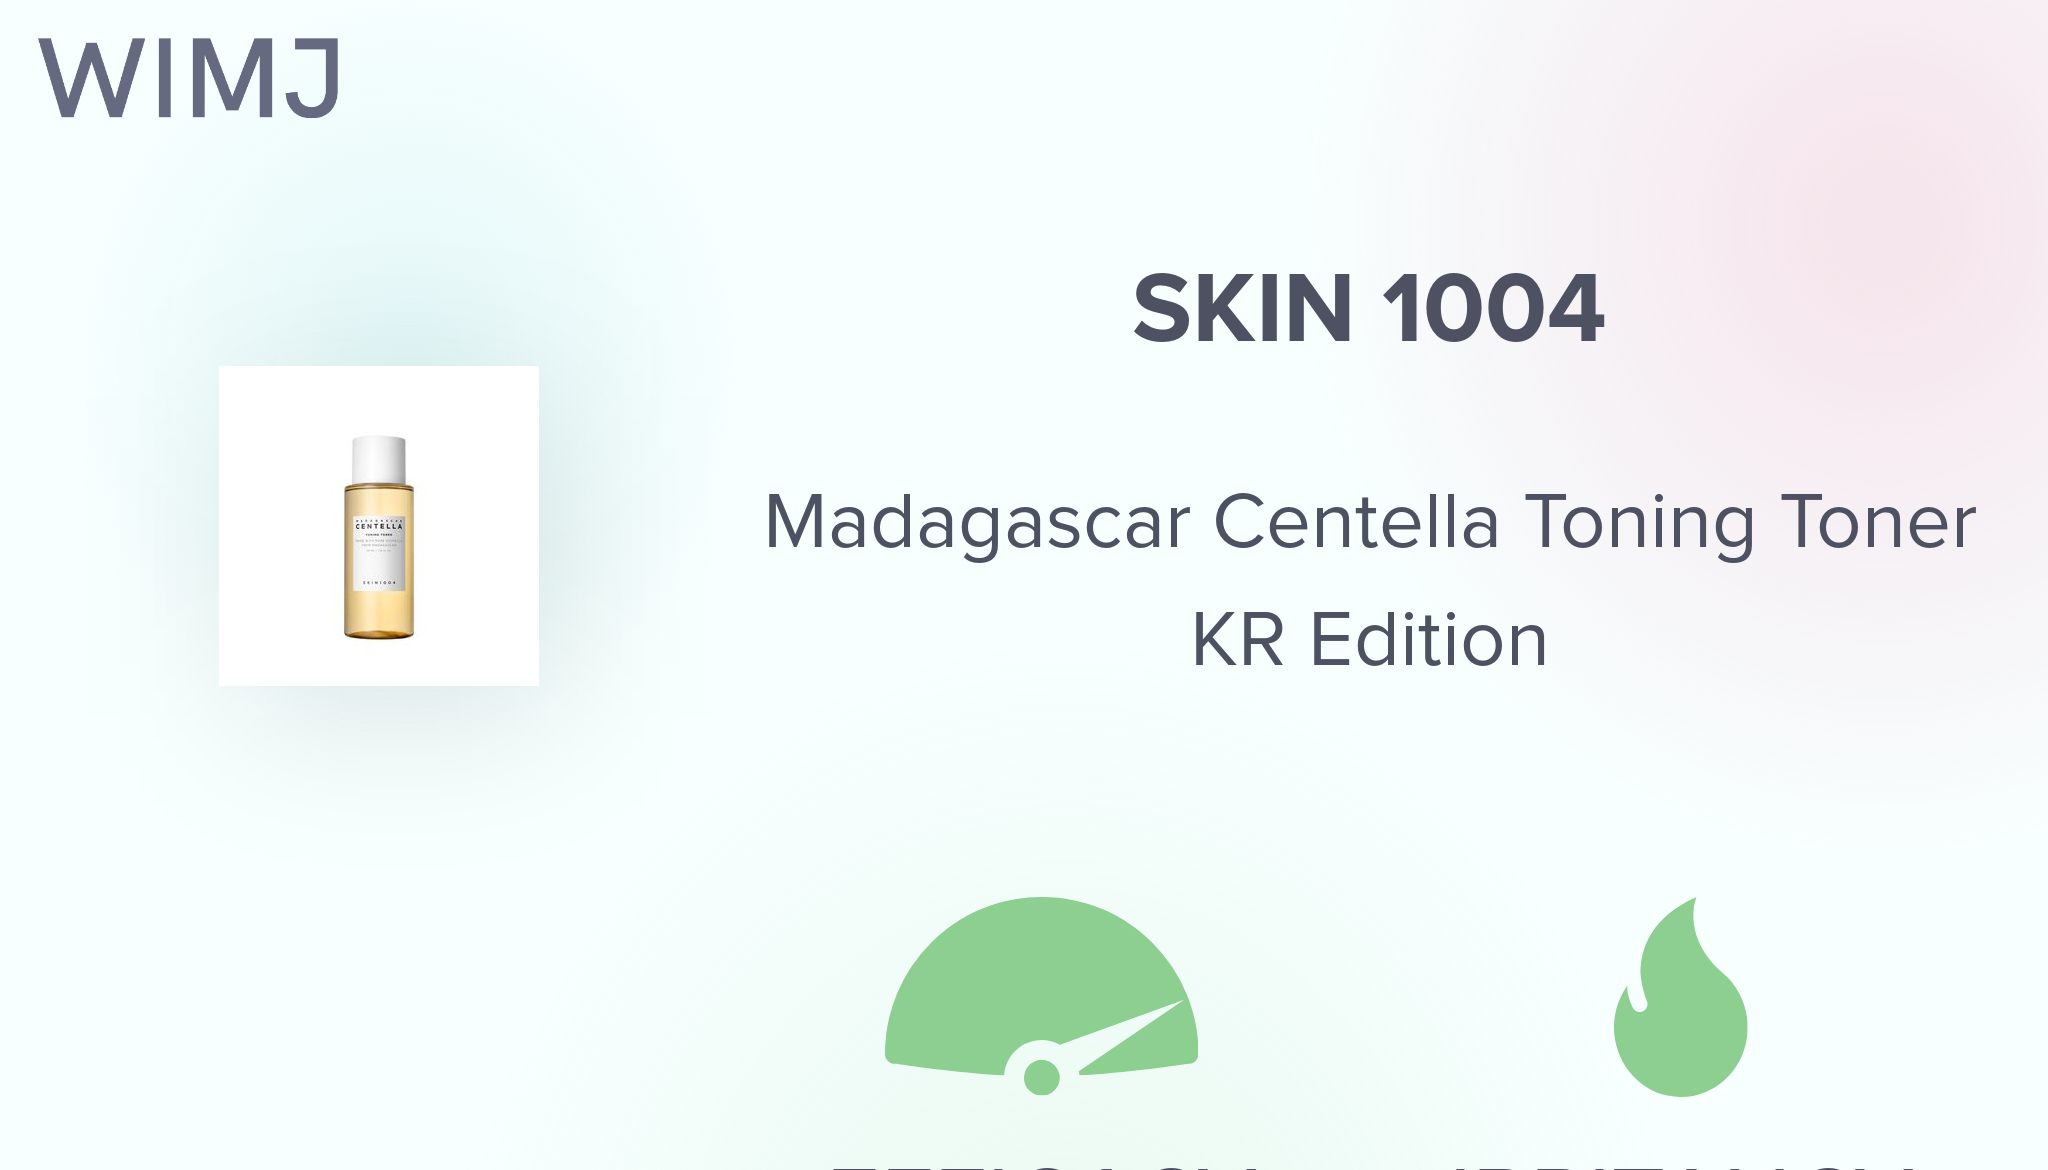 Review: SKIN 1004 - Madagascar Centella Toning Toner KR Edition